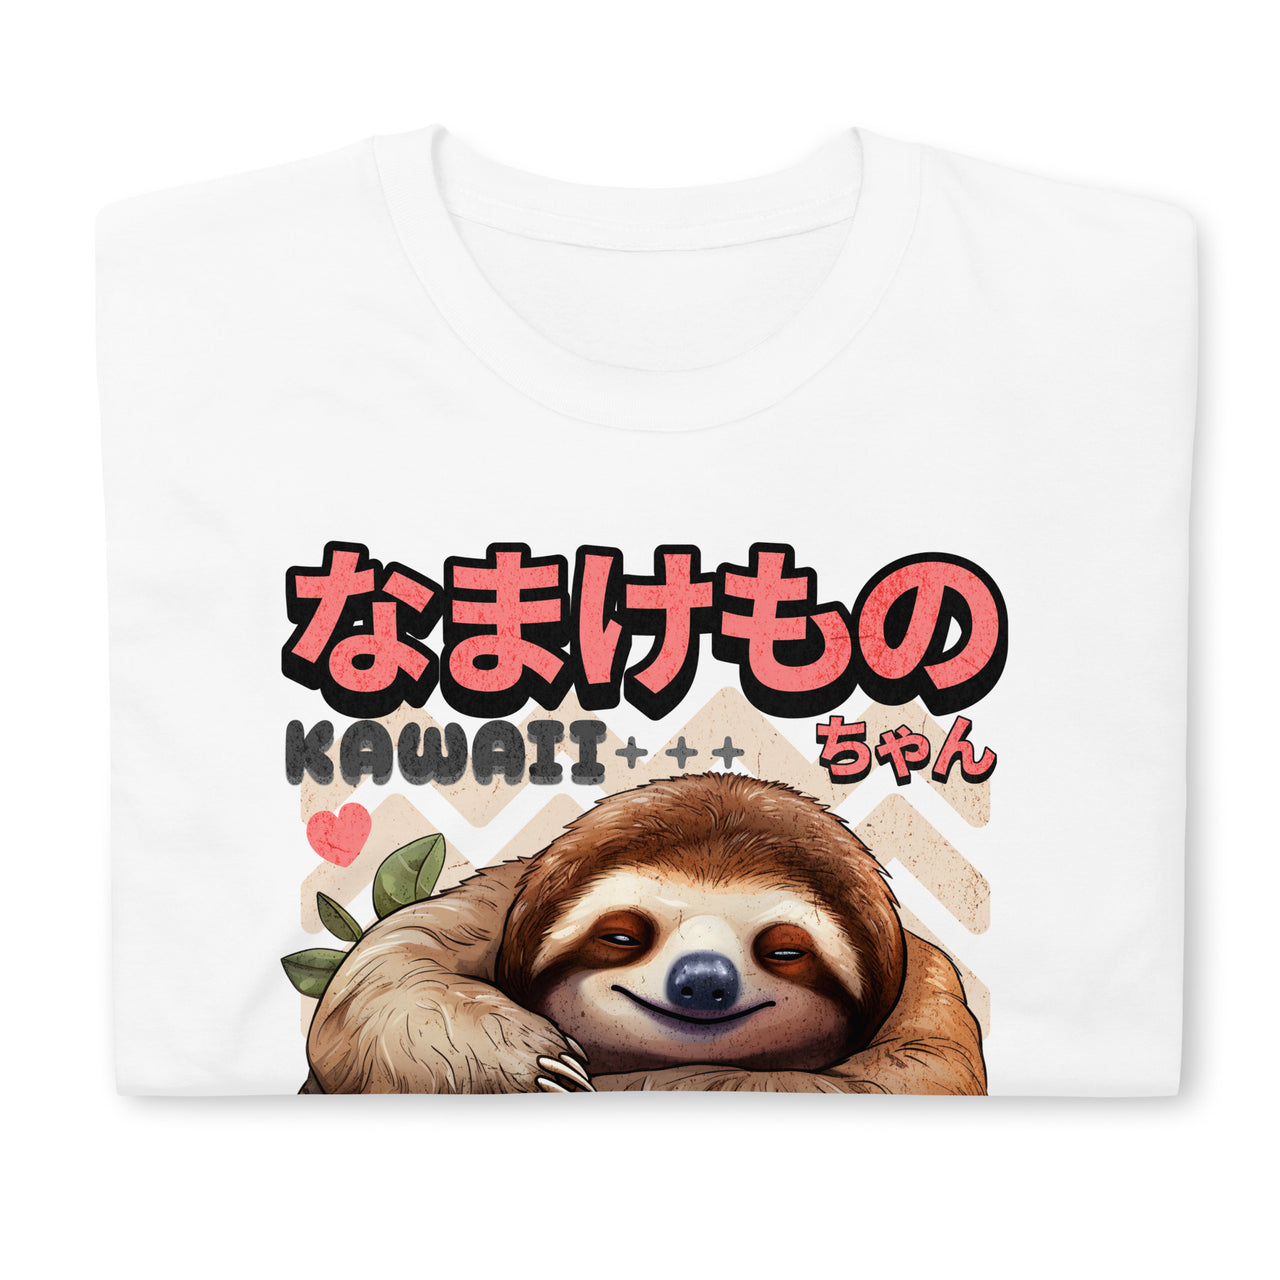 Kawaii Sloth: Namakemono Chill T-Shirt